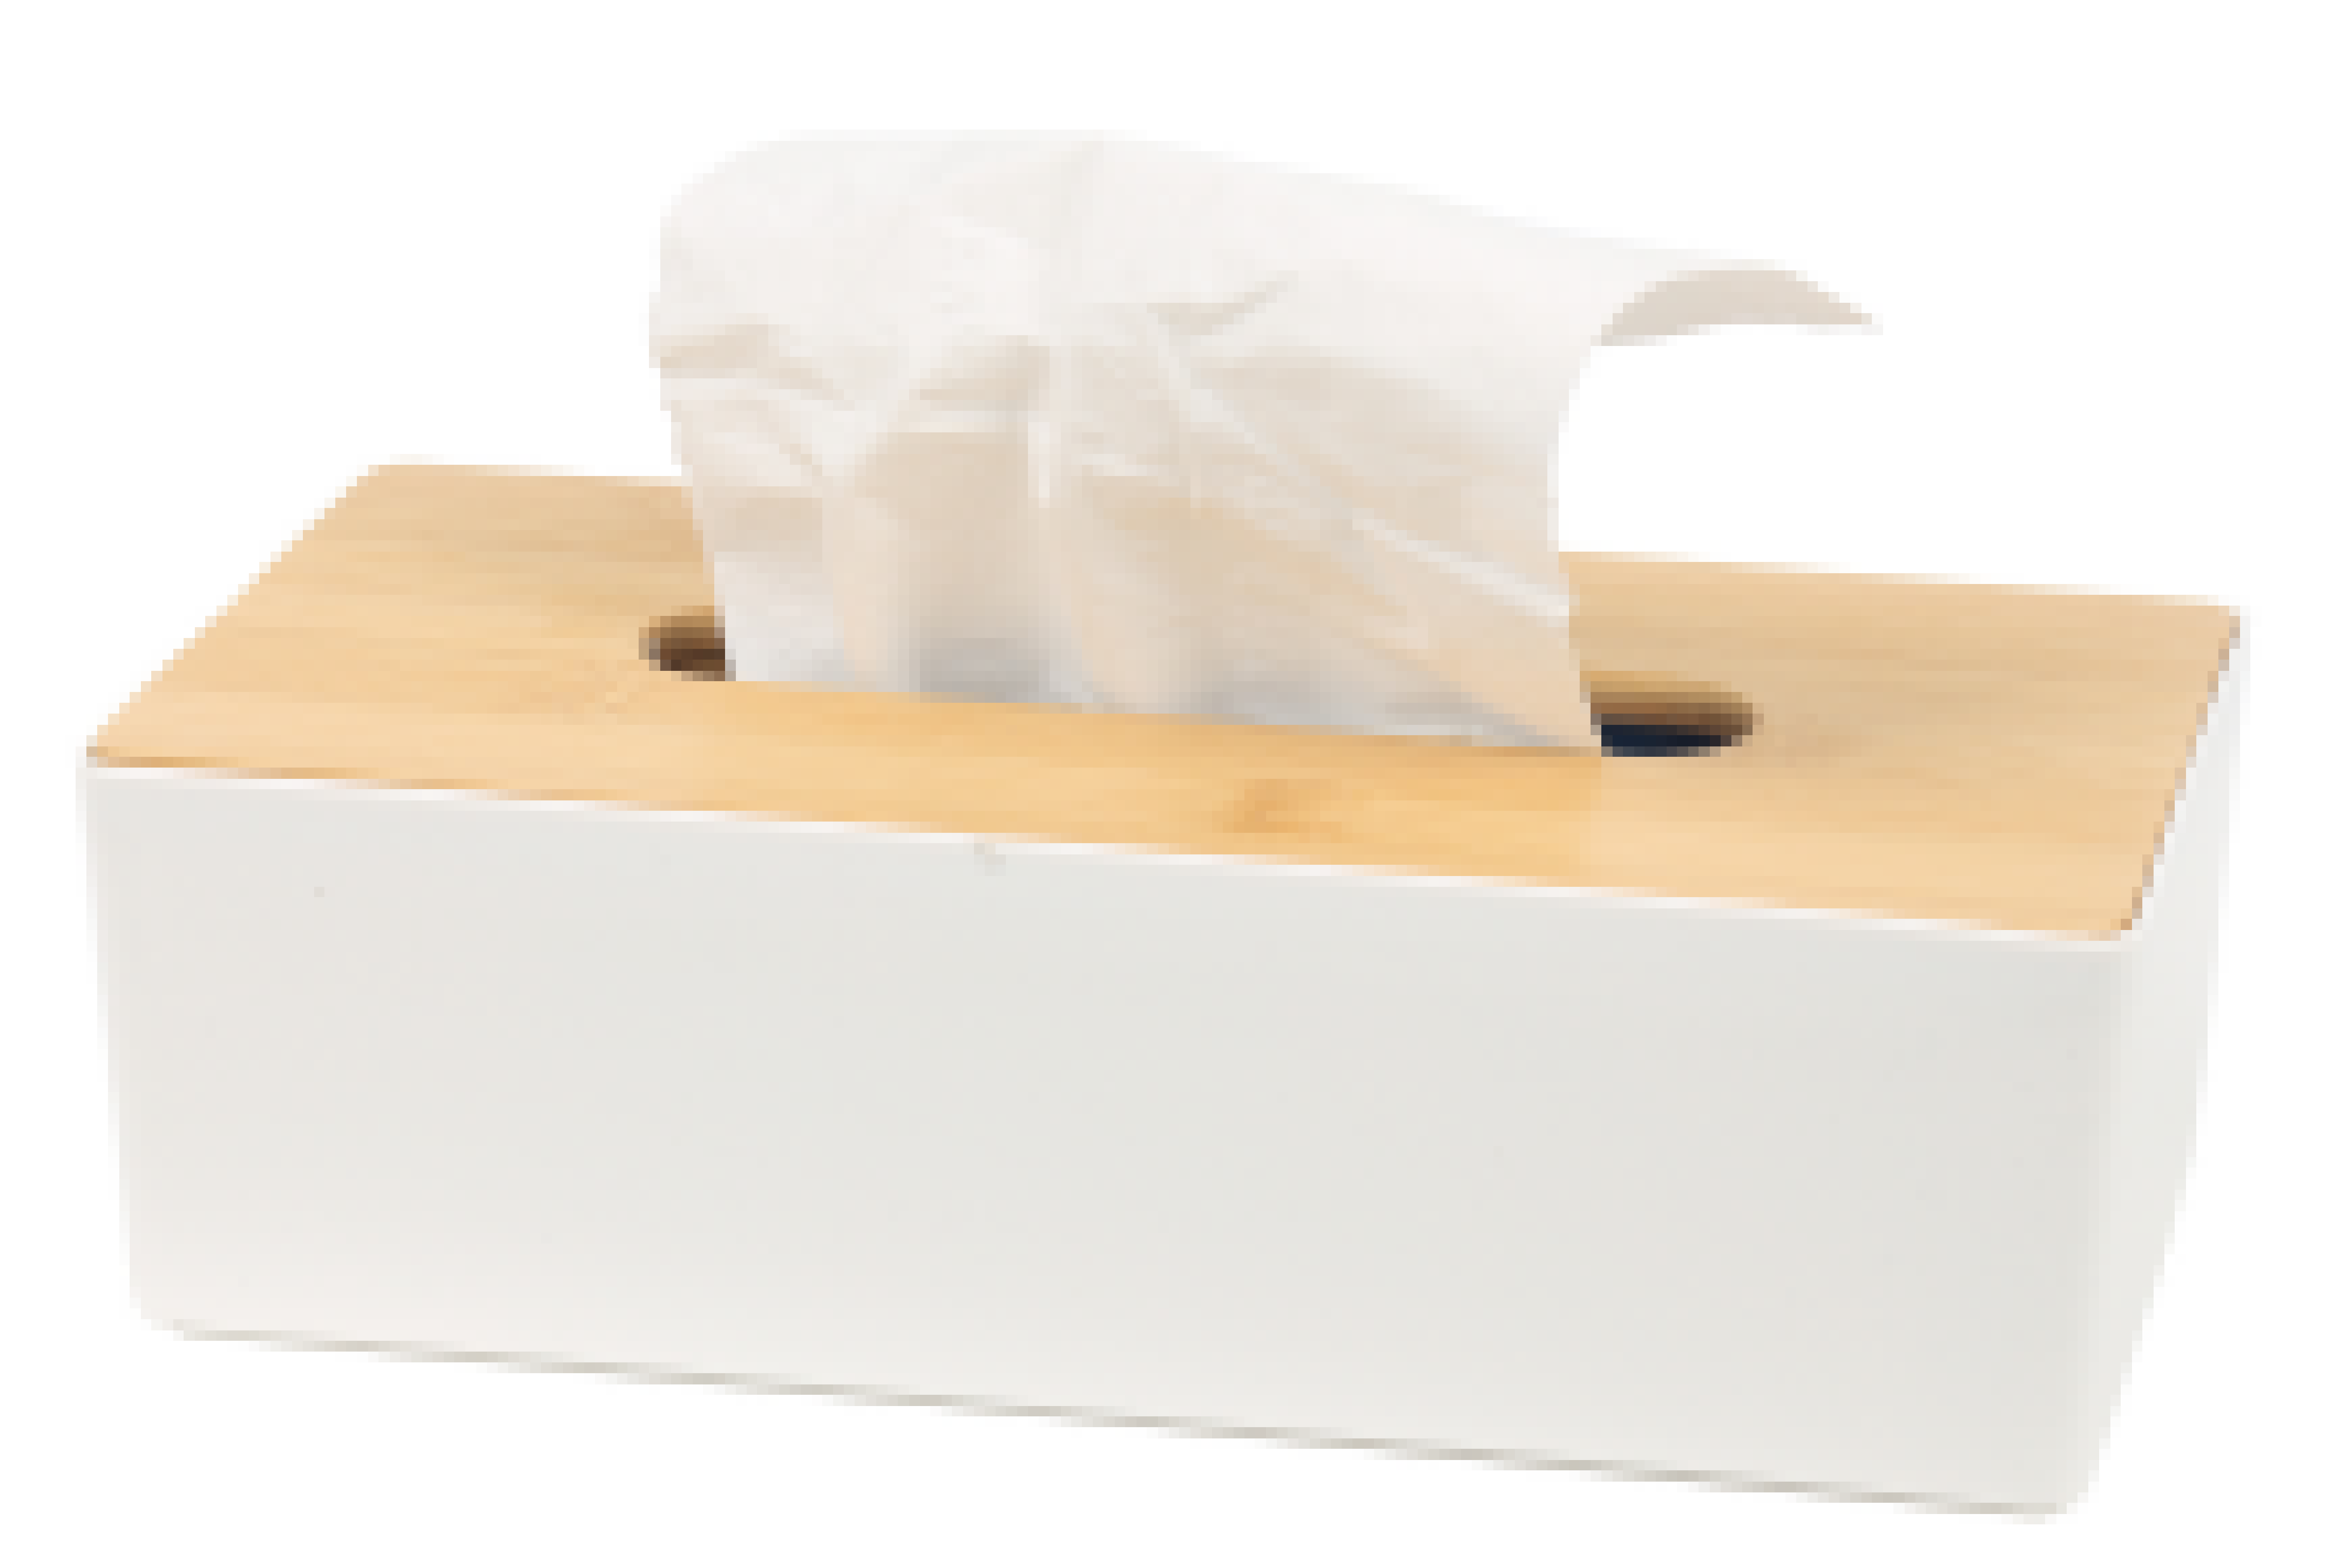 Tissue box holder